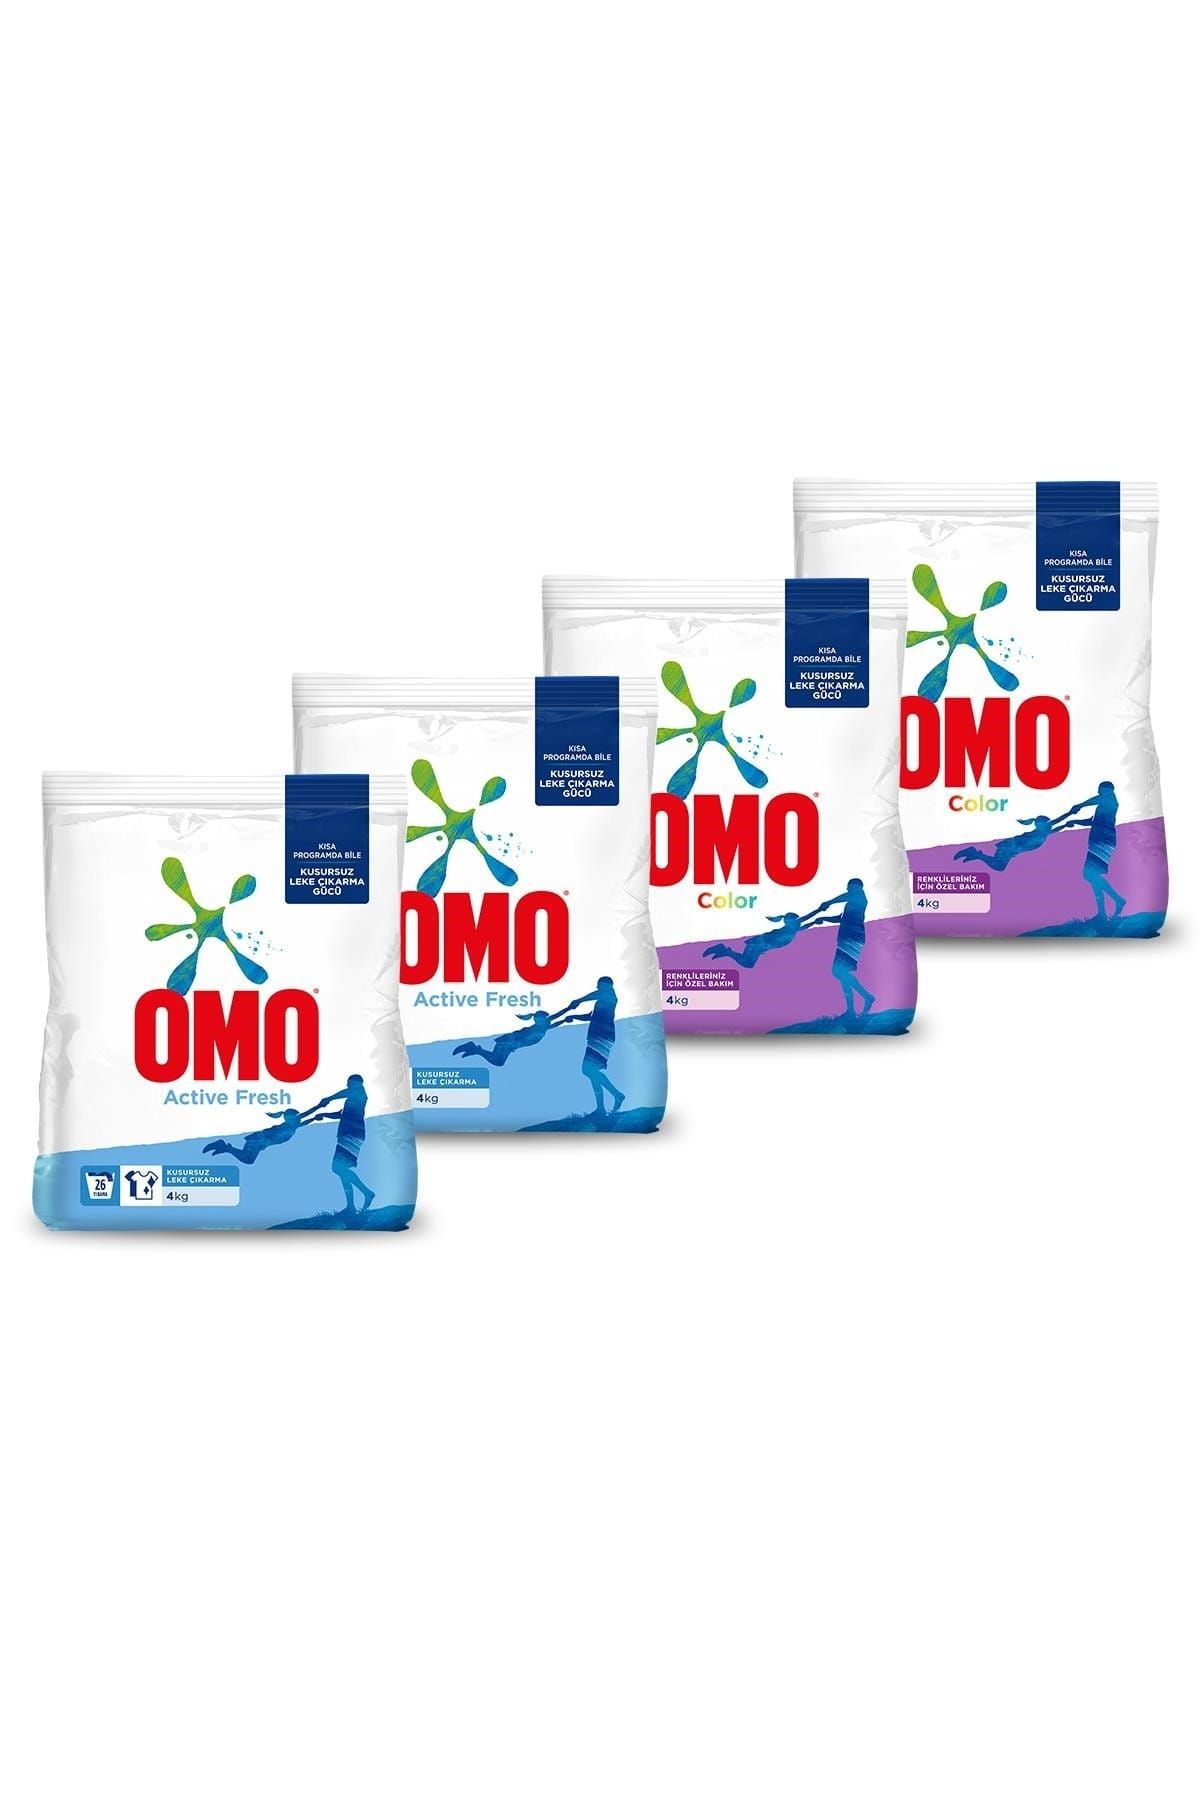 Omo Toz Çamaşır Deterjanı Active Fresh 4 kg x 2 + Color 4 kg x 2